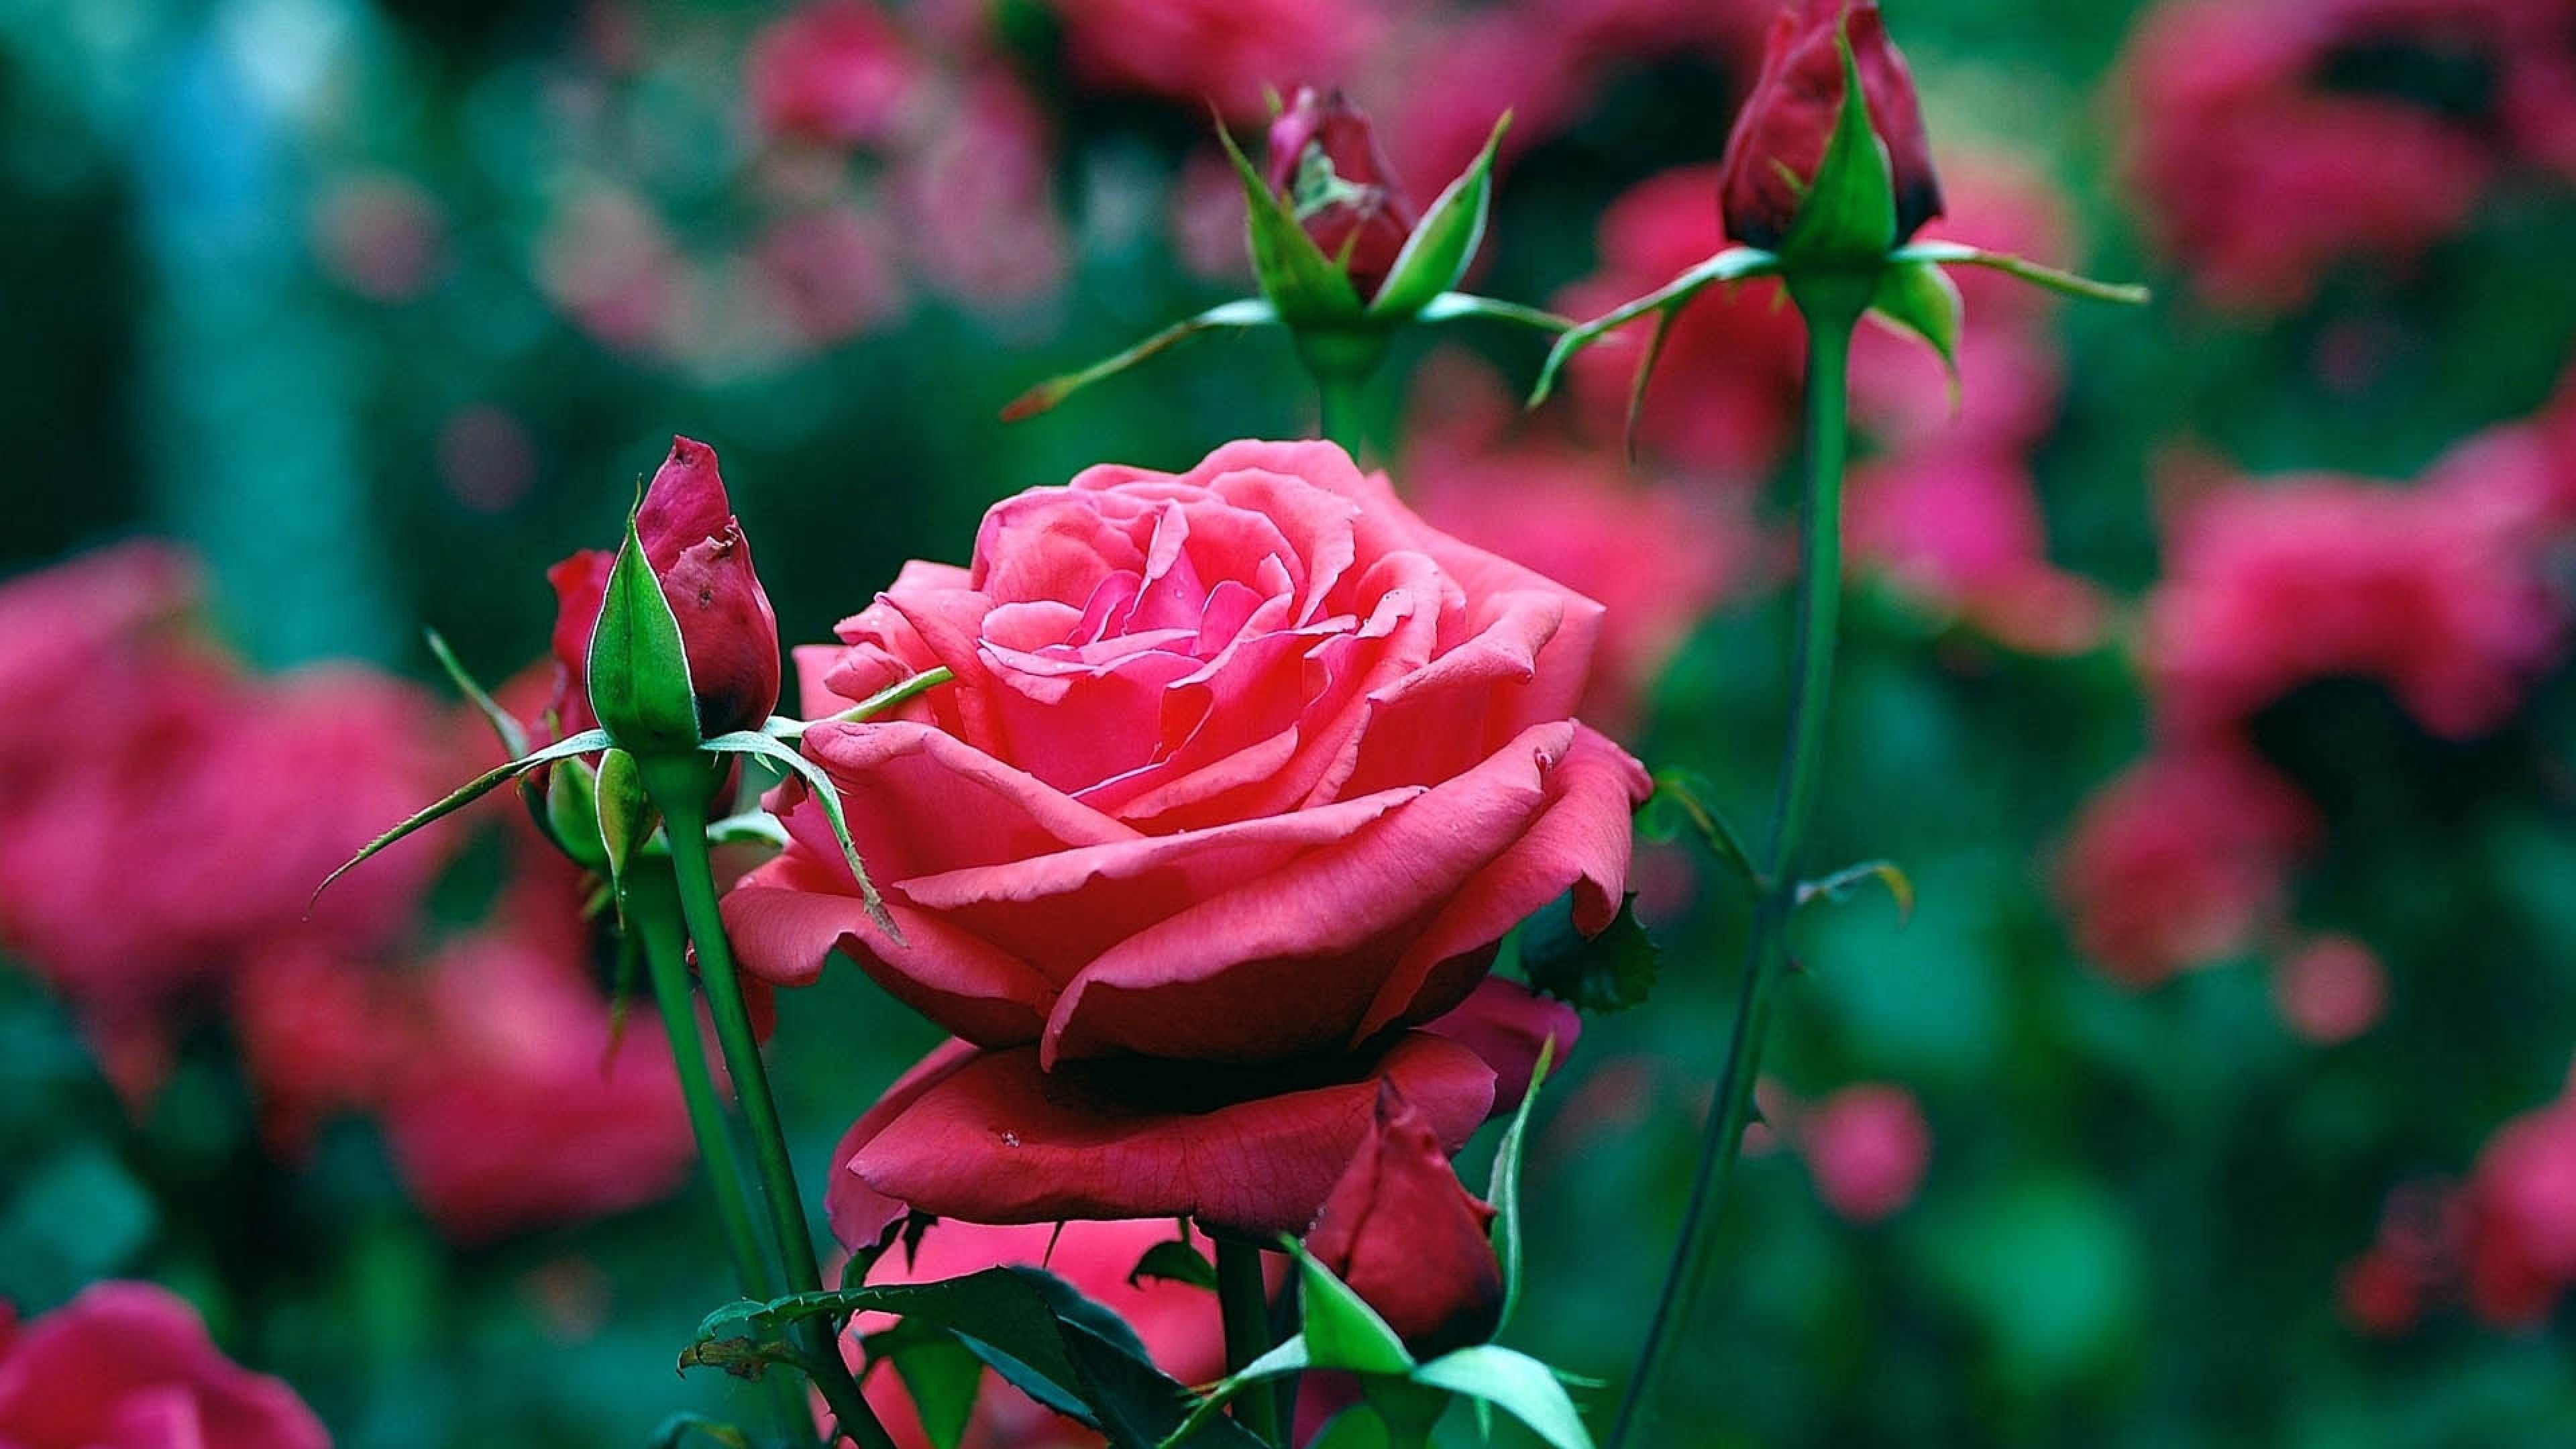 flower wallpaper hd 1080p,flower,flowering plant,garden roses,petal,pink